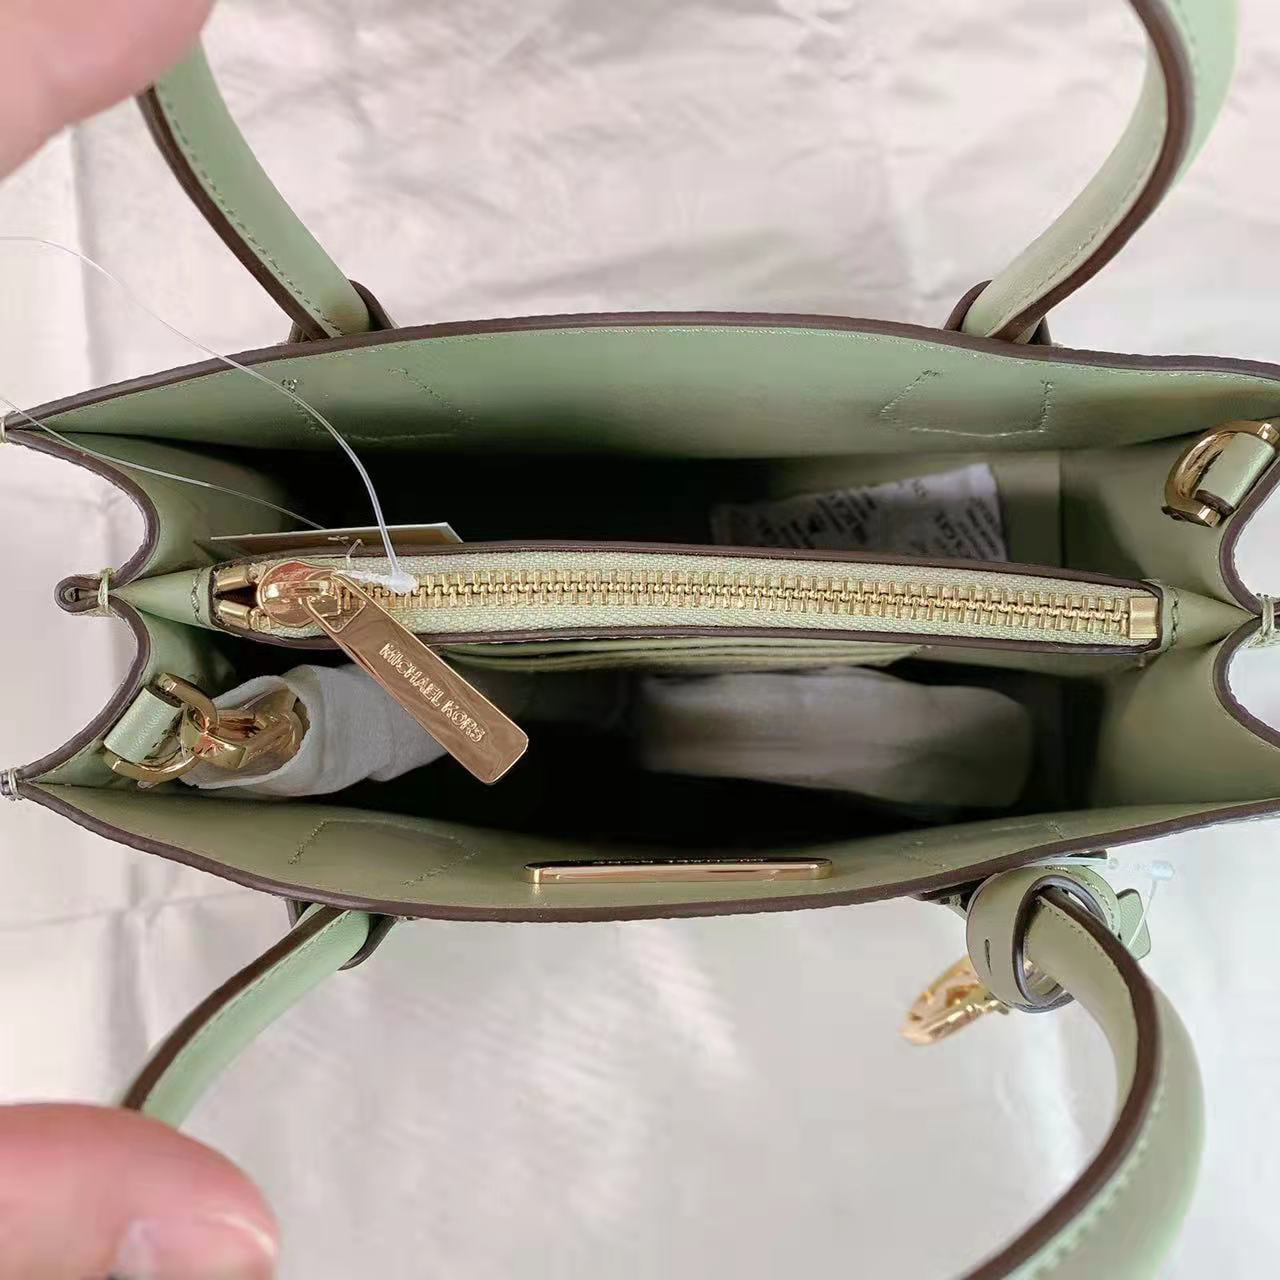 Michael Kors Mercer Medium Saffiano Leather Accordion Crossbody Bag